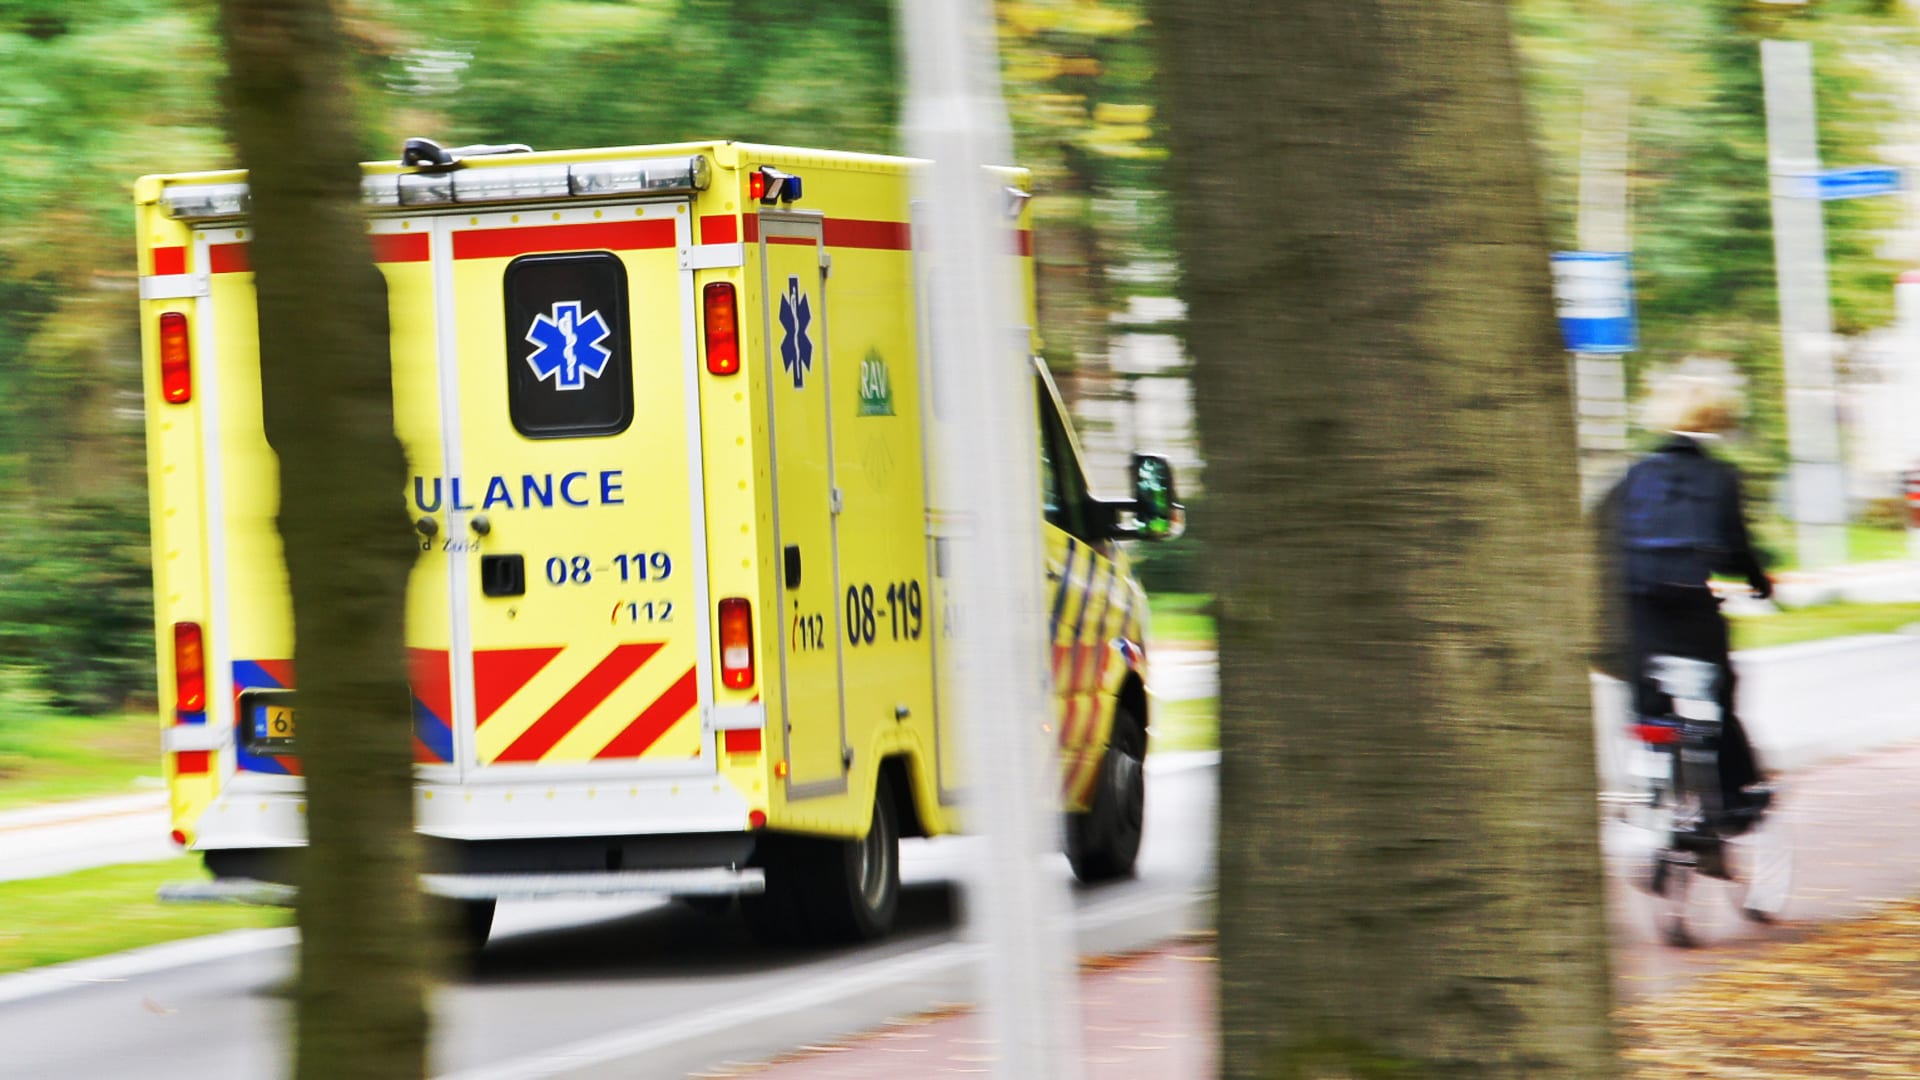 'Gewonde' man vernielt ruit van ambulance met bierflesje